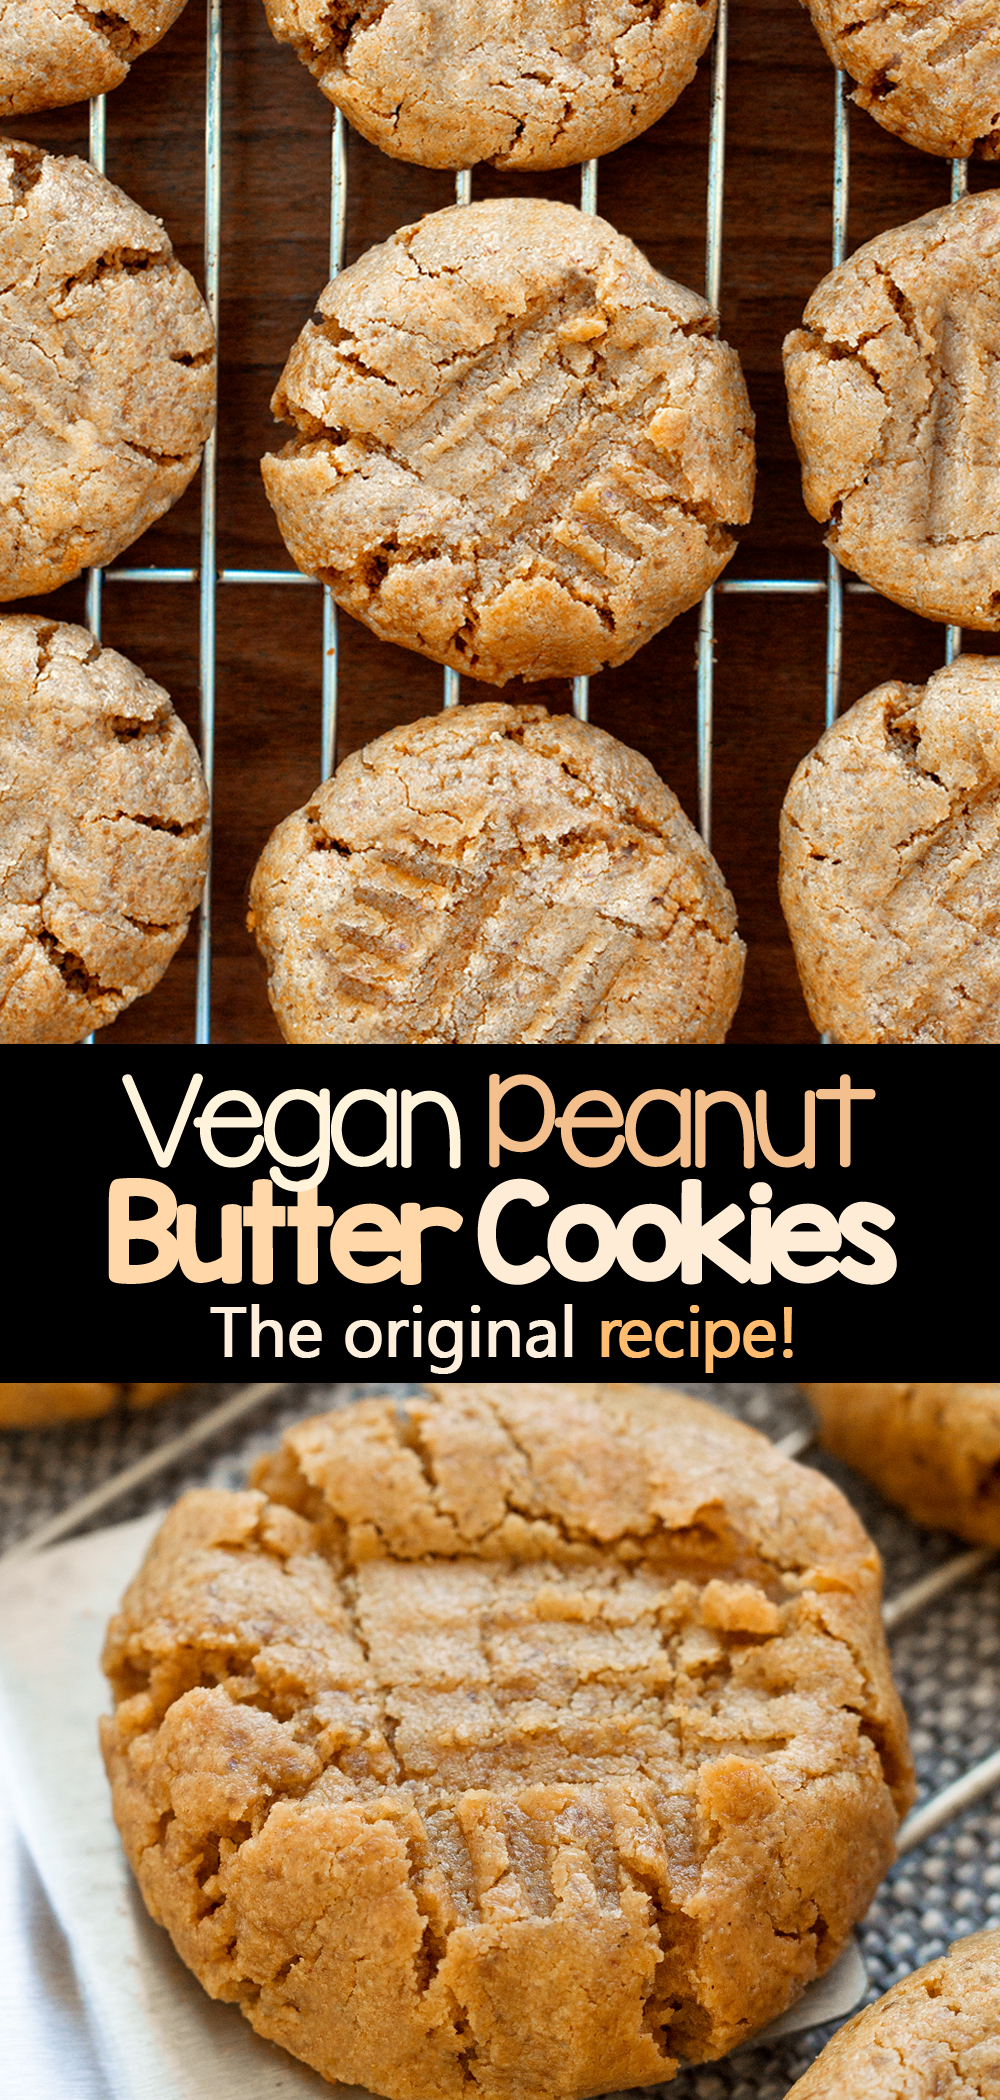 The Original Vegan Peanut Butter Cookie Recipe - Vegan Peanut Butter Cookies - They MELT in your mouth!